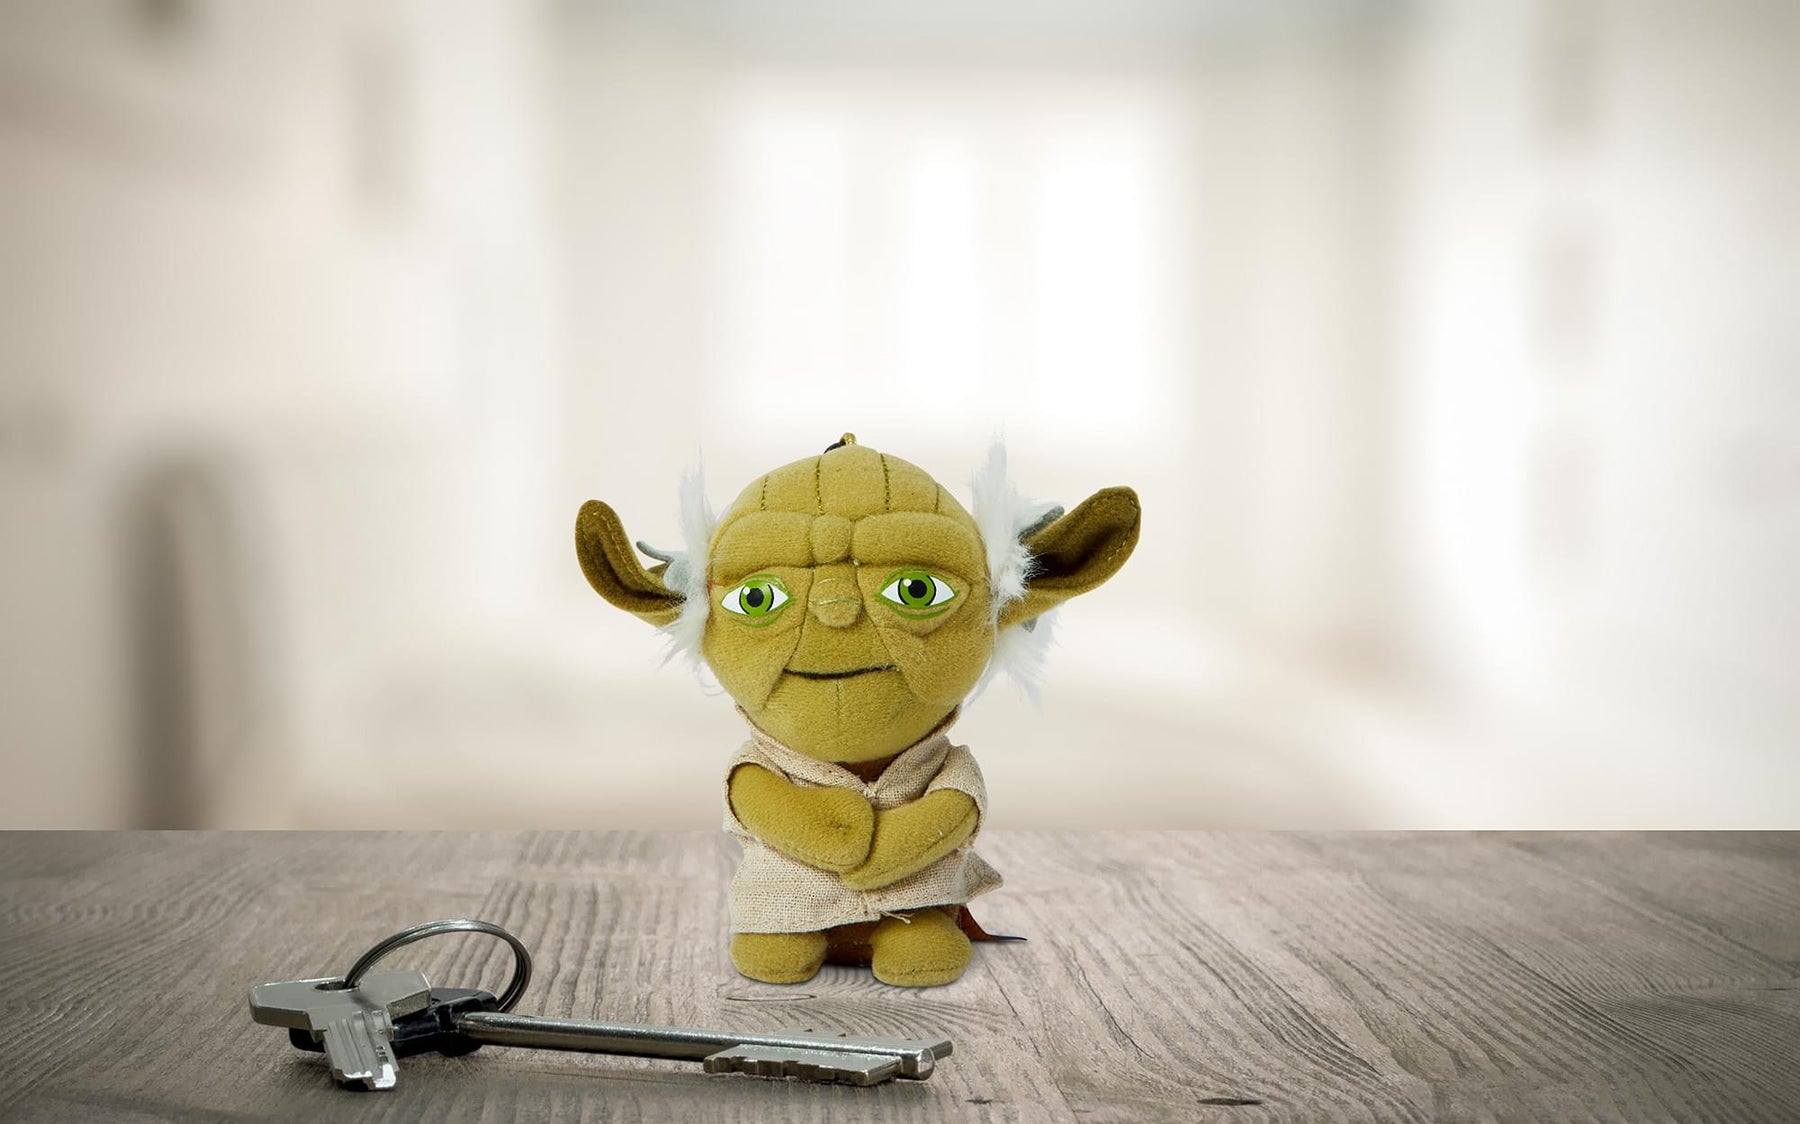 Star Wars Mini 4" Talking Plush Toy Clip On - Yoda